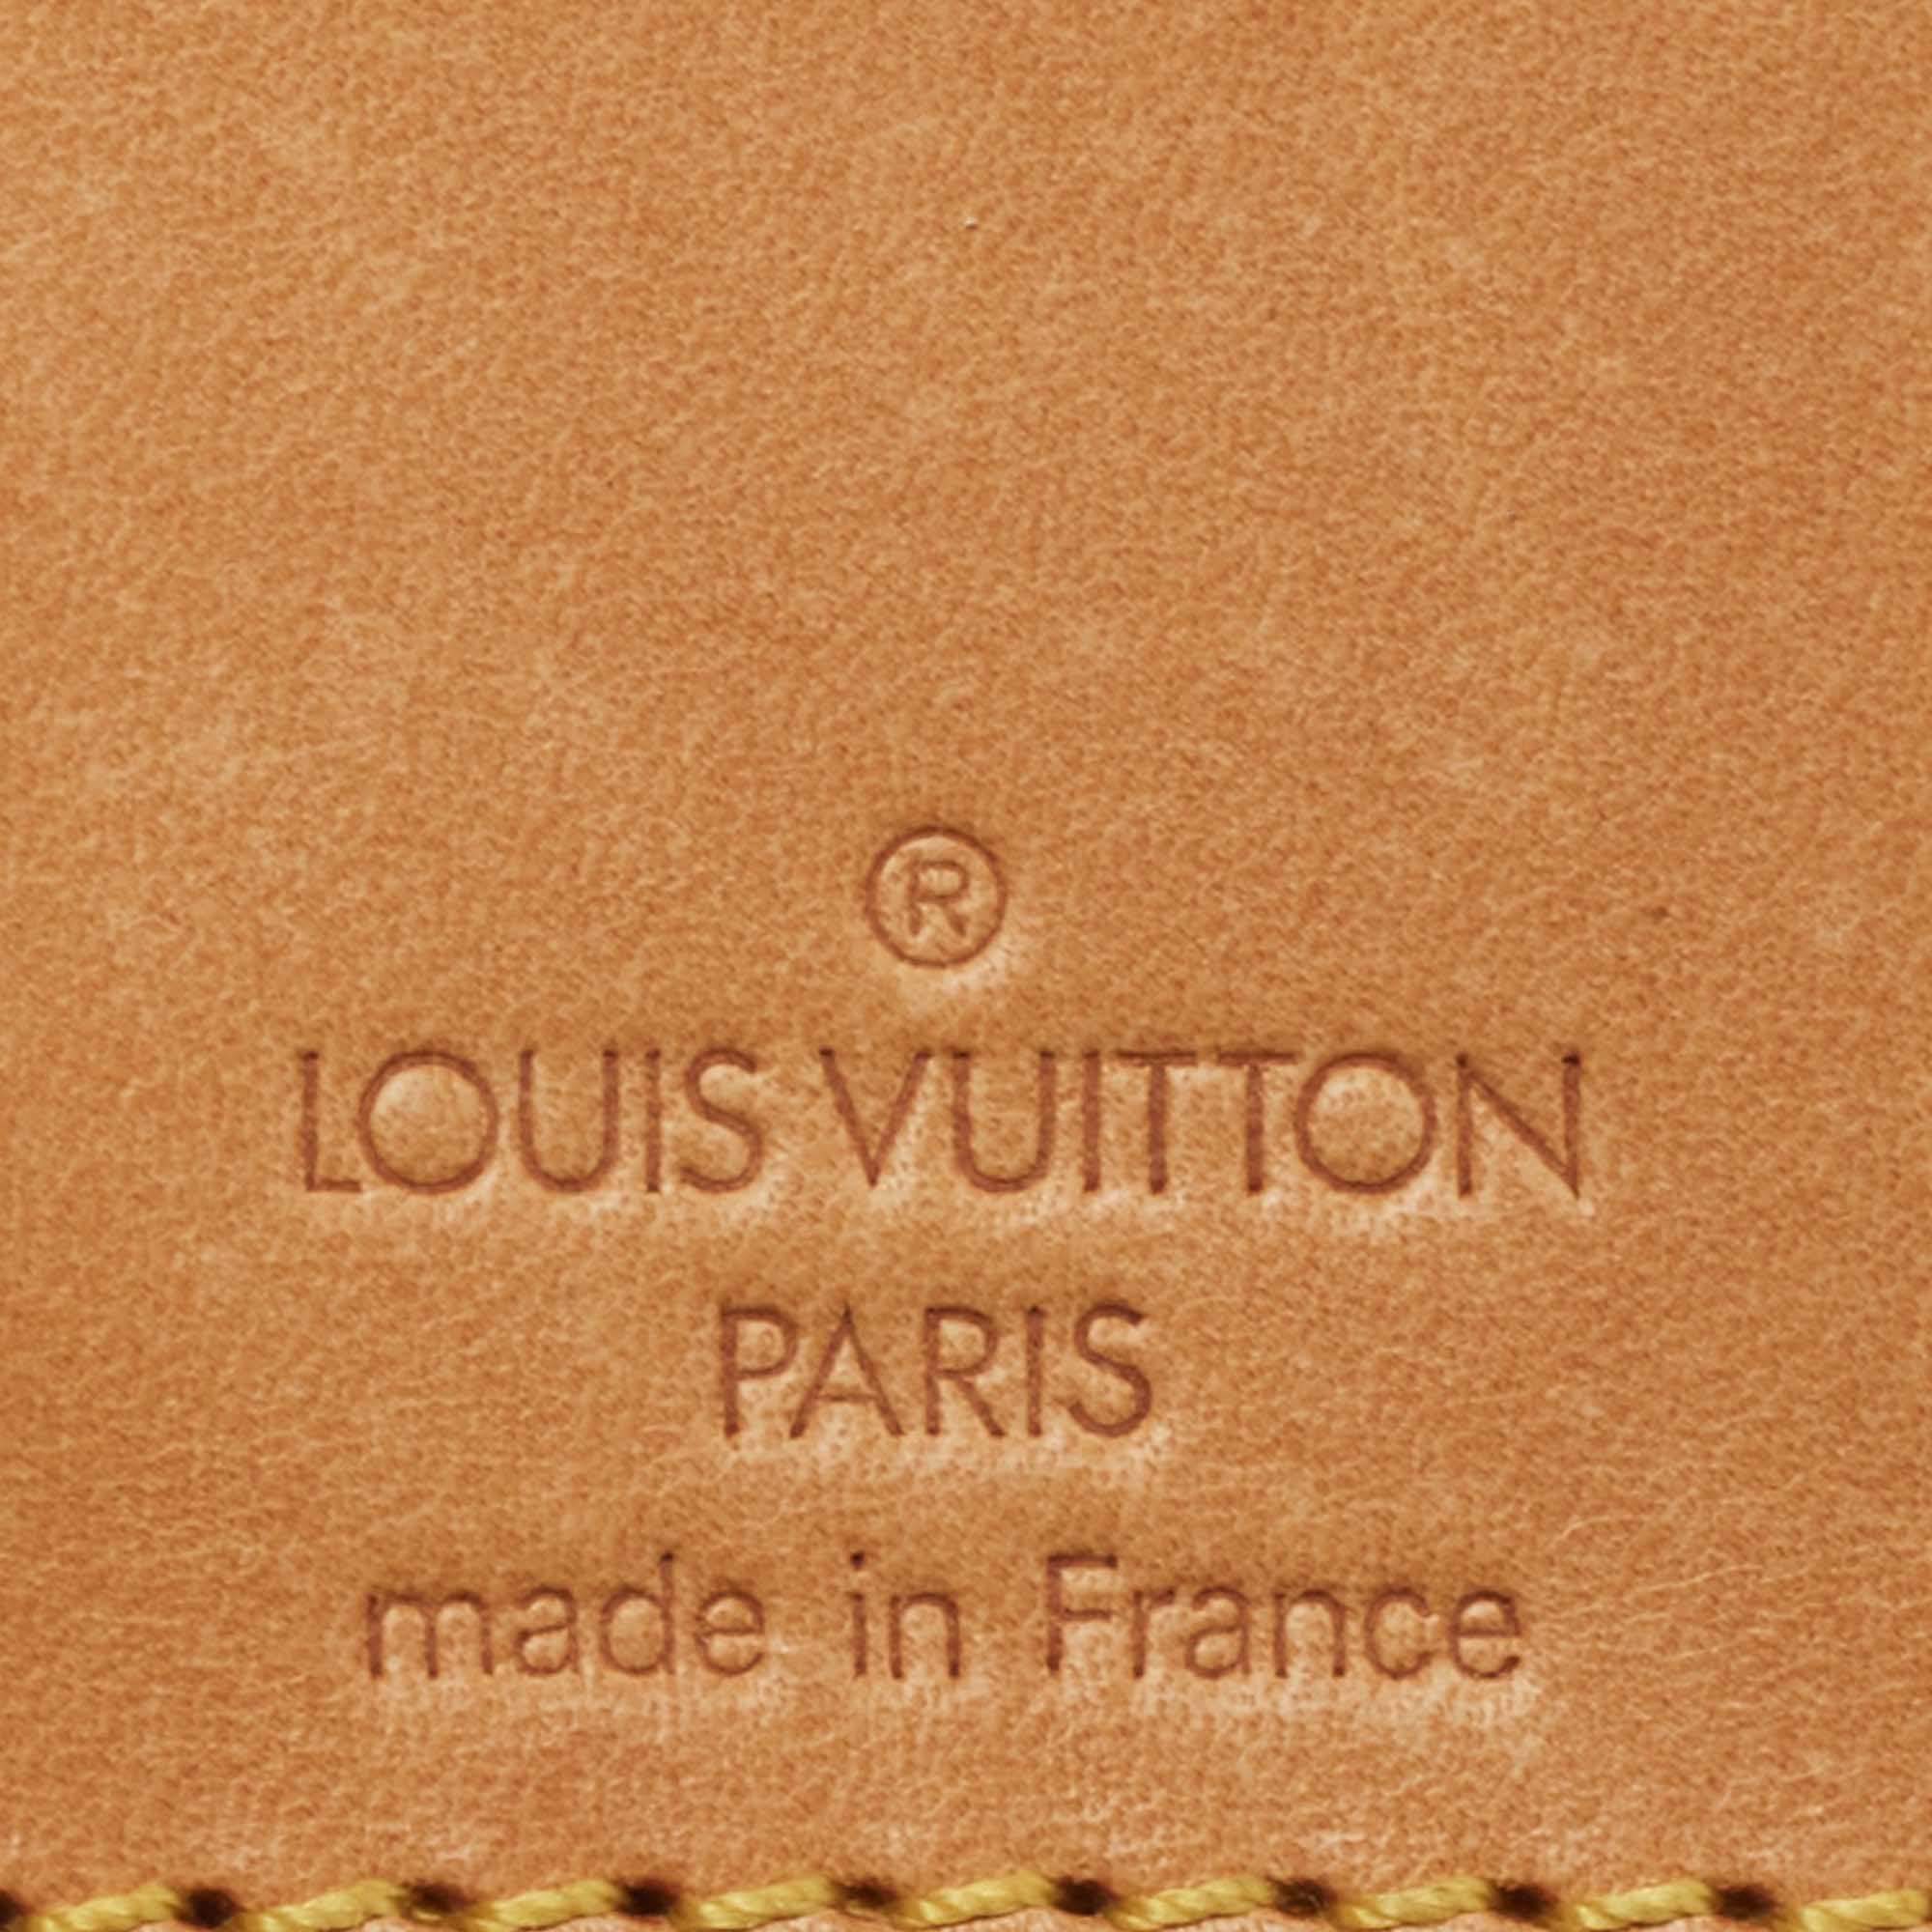 Louis Vuitton Vachetta Leather Luggage ID Tag Name Tag 10615 